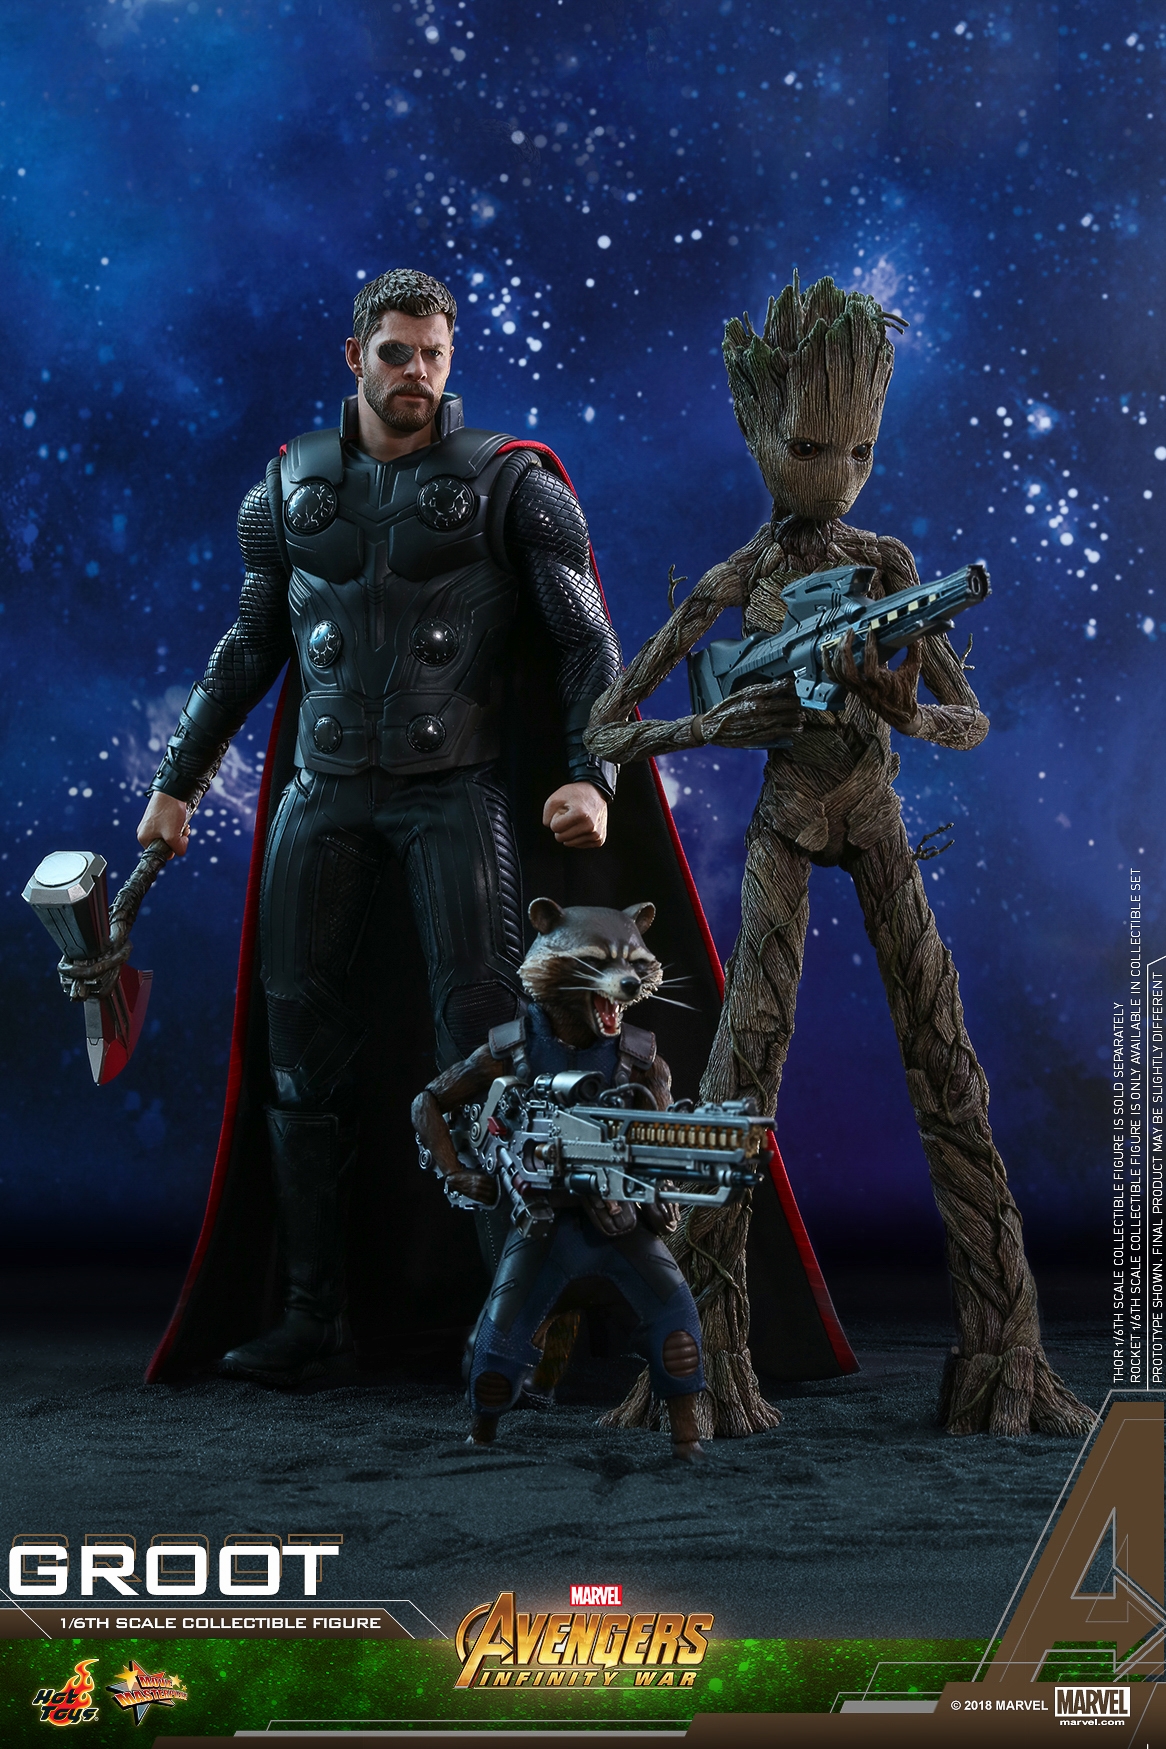 Hot-Toys-MMS475-Avengers-Infinit-War-Groot-Collectible-Figure-016.jpg